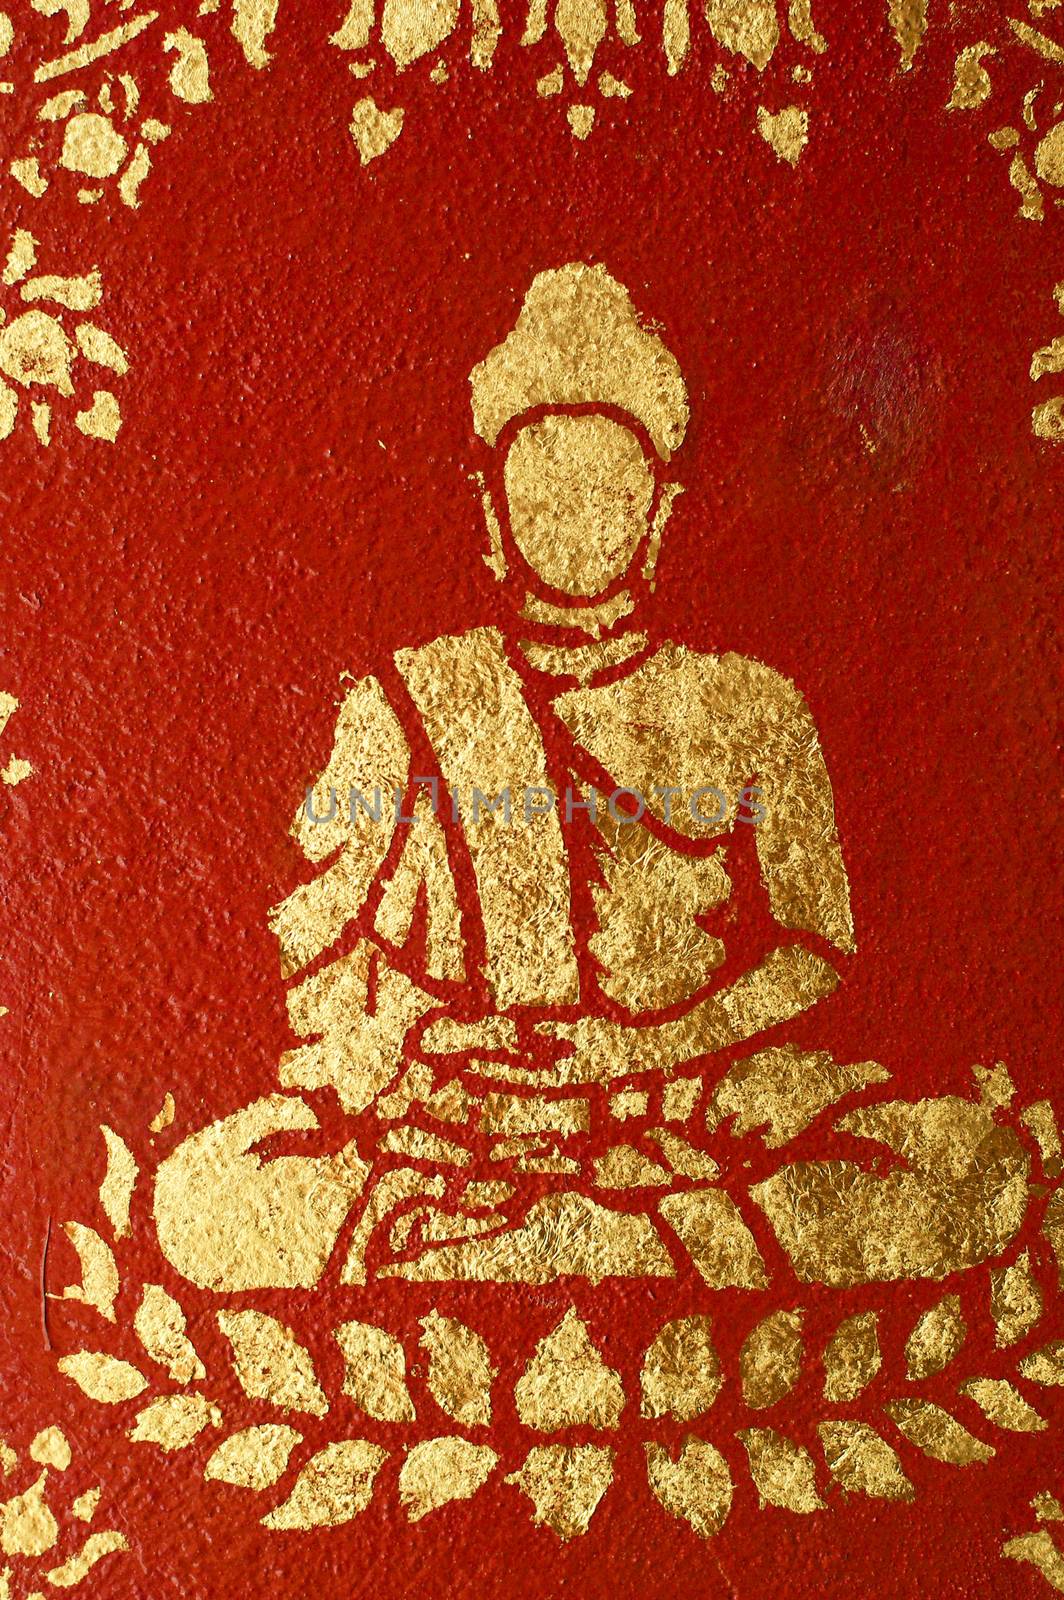 Image of buddha drawing